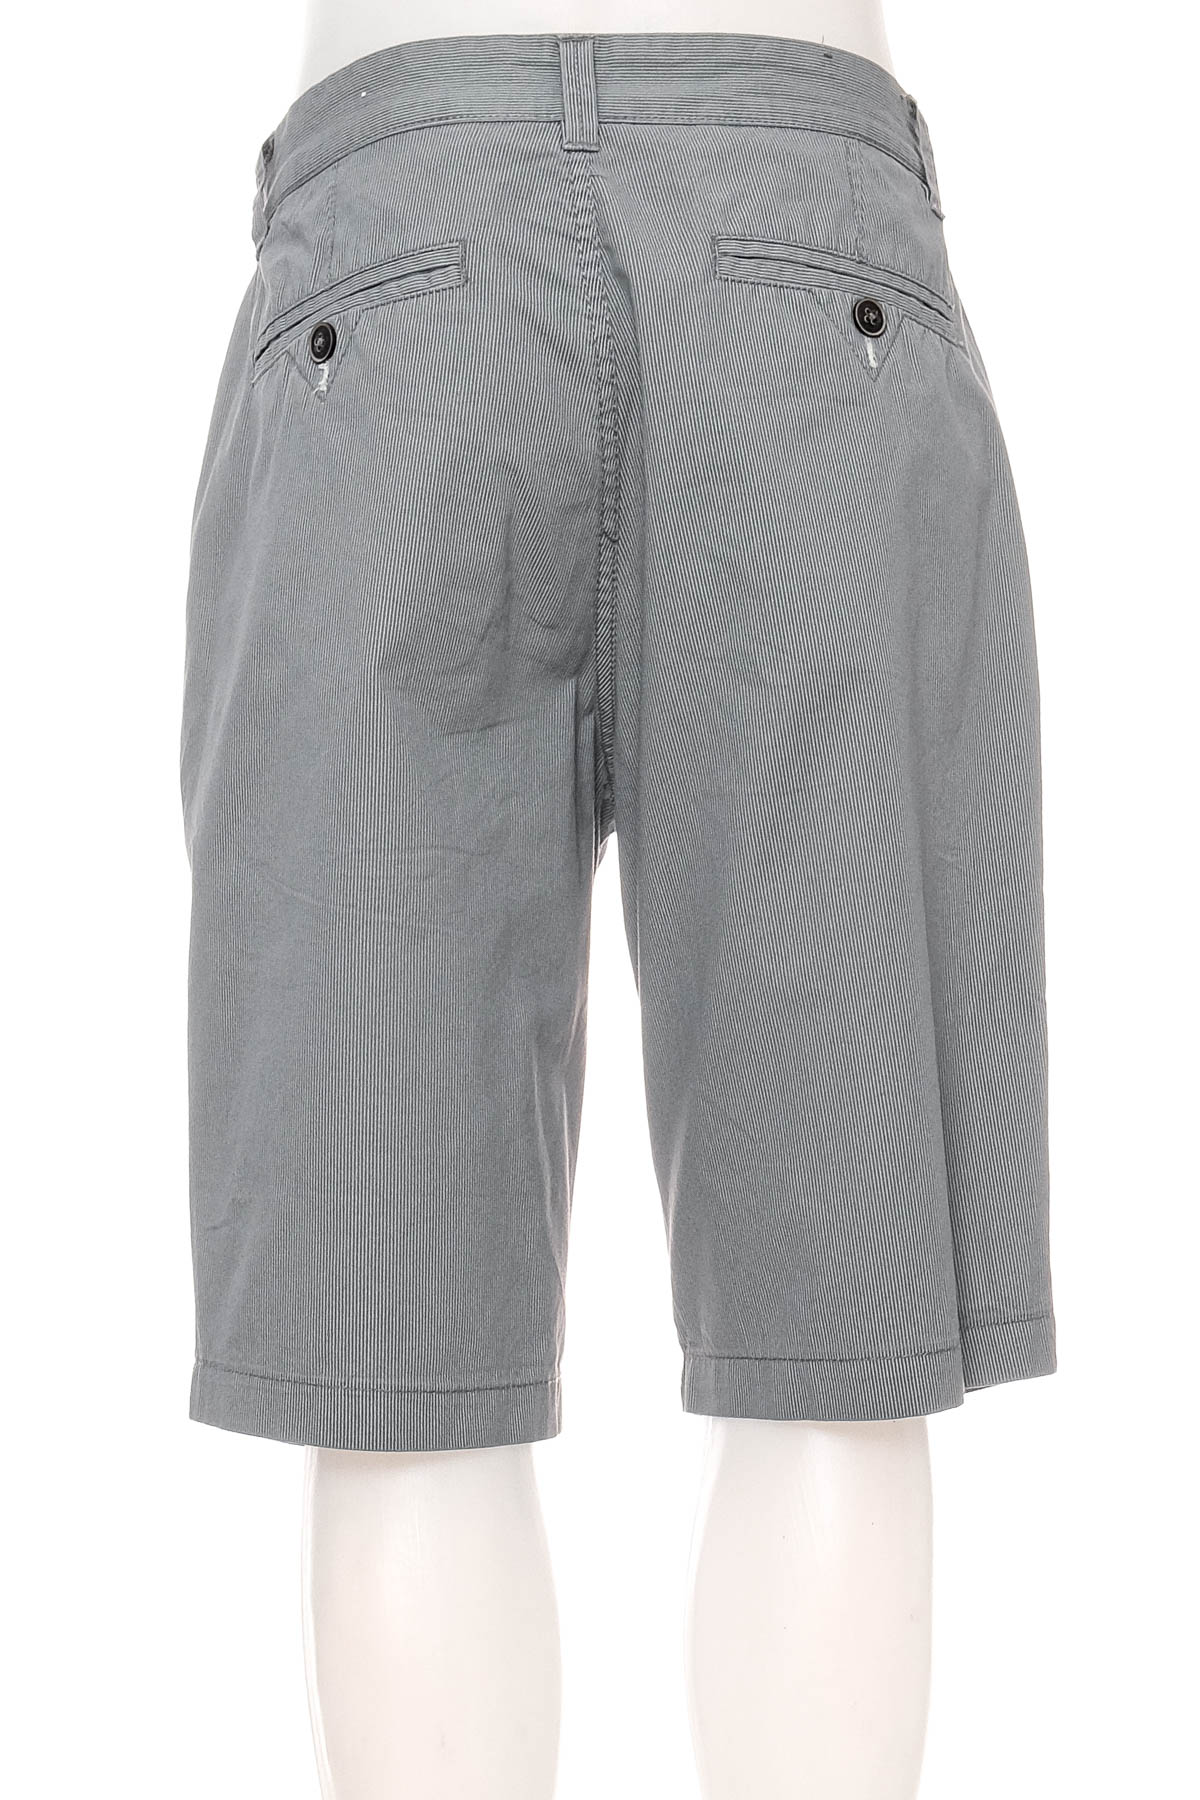 Men's shorts - Springfield - 1